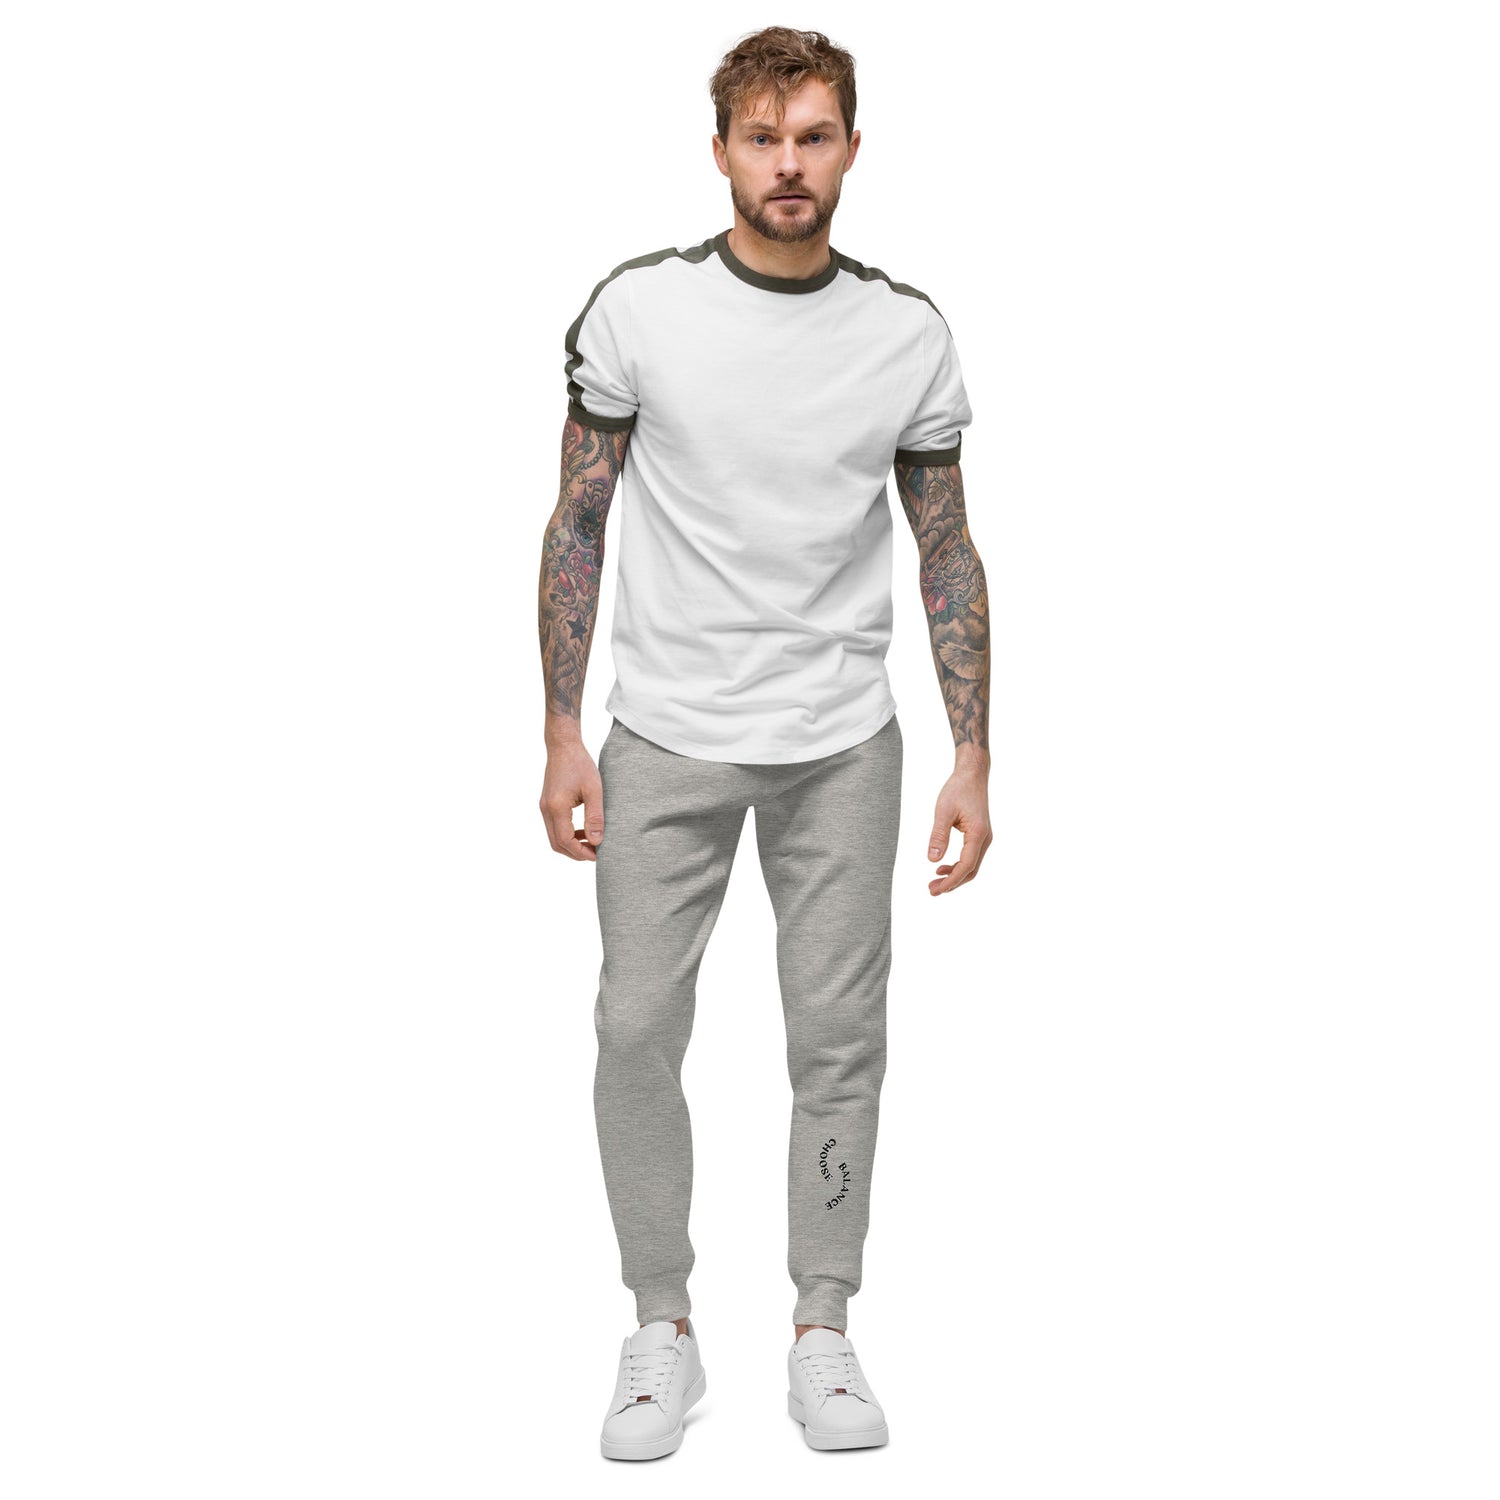 Full Length Grey Sweat pant with "Choose Balance" printed on left lower leg.